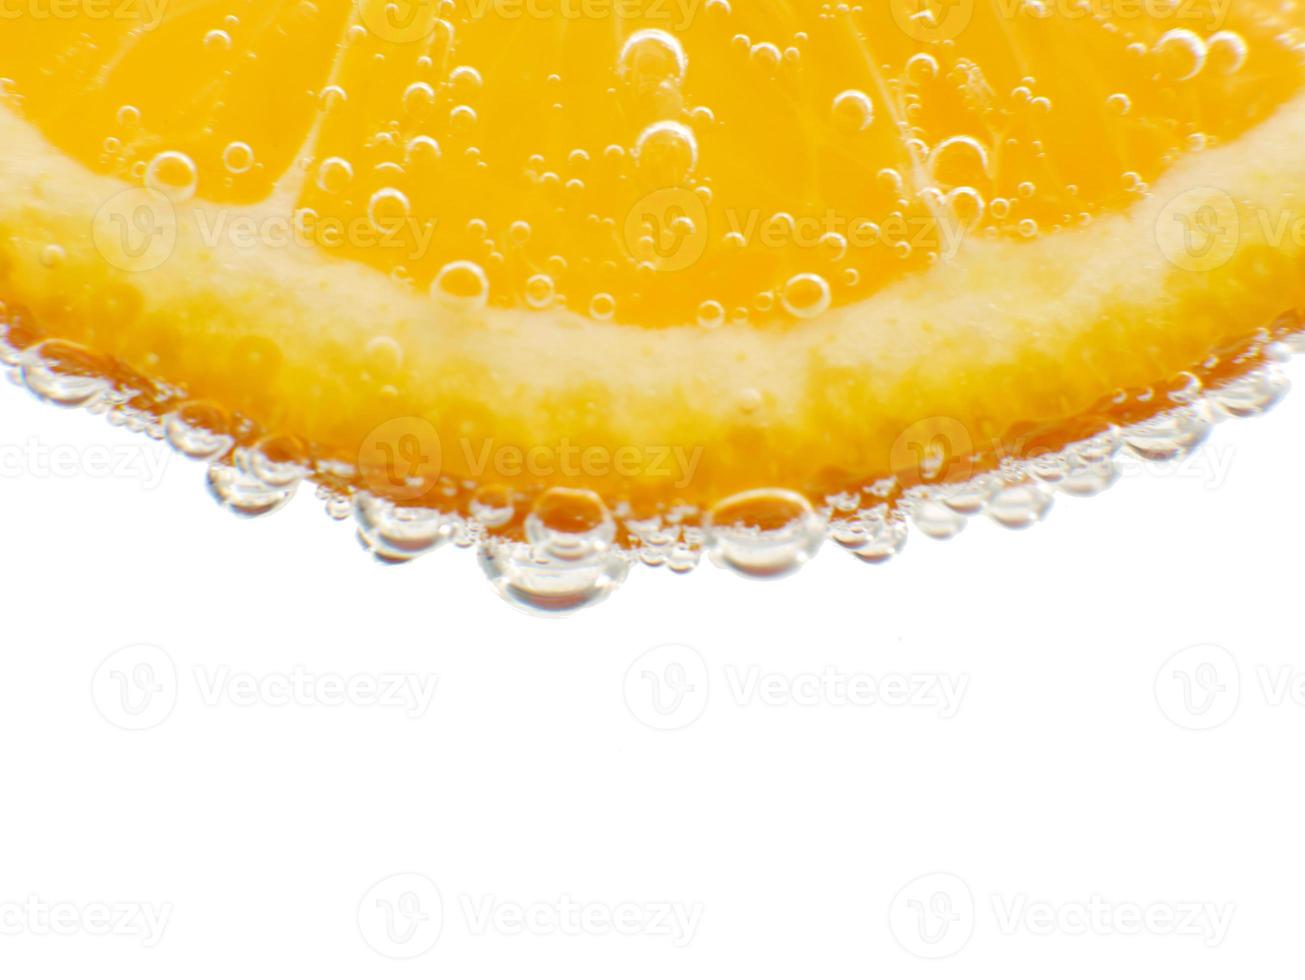 primer plano naranja en agua con gas fondo blanco foto